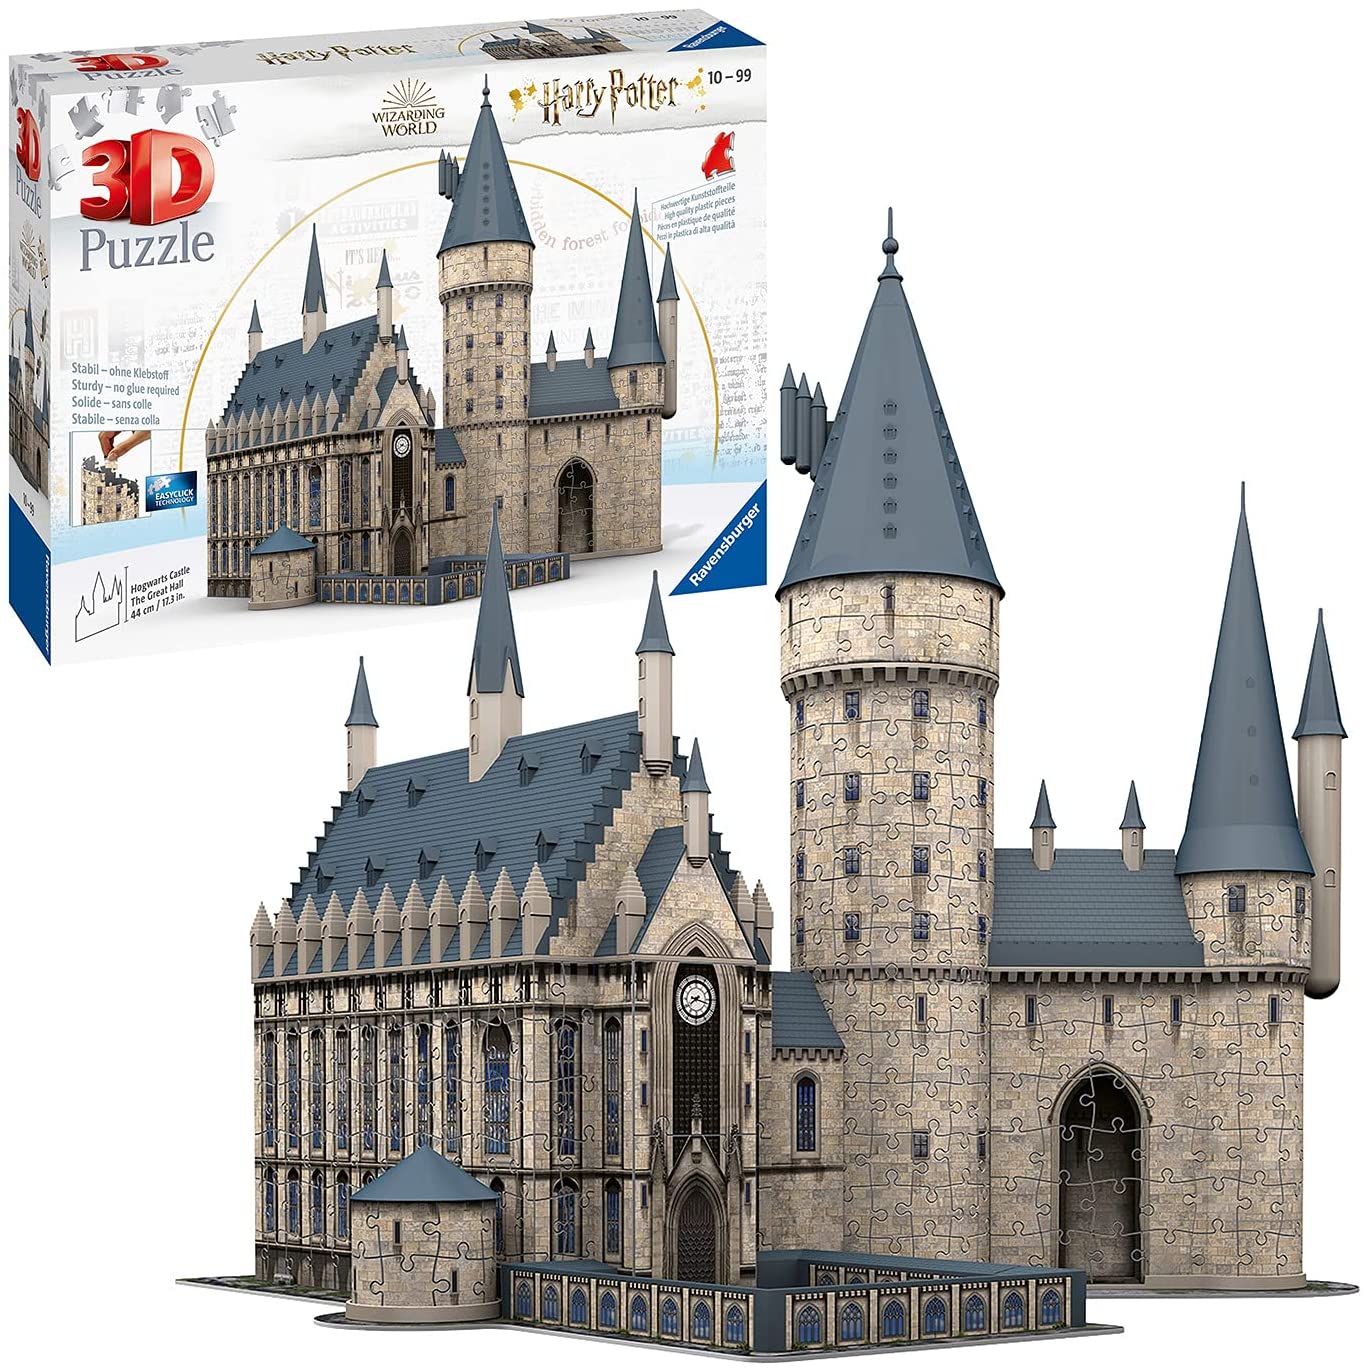 8 piatti in cartone Hogwarts Harry Potter™ 23 cm